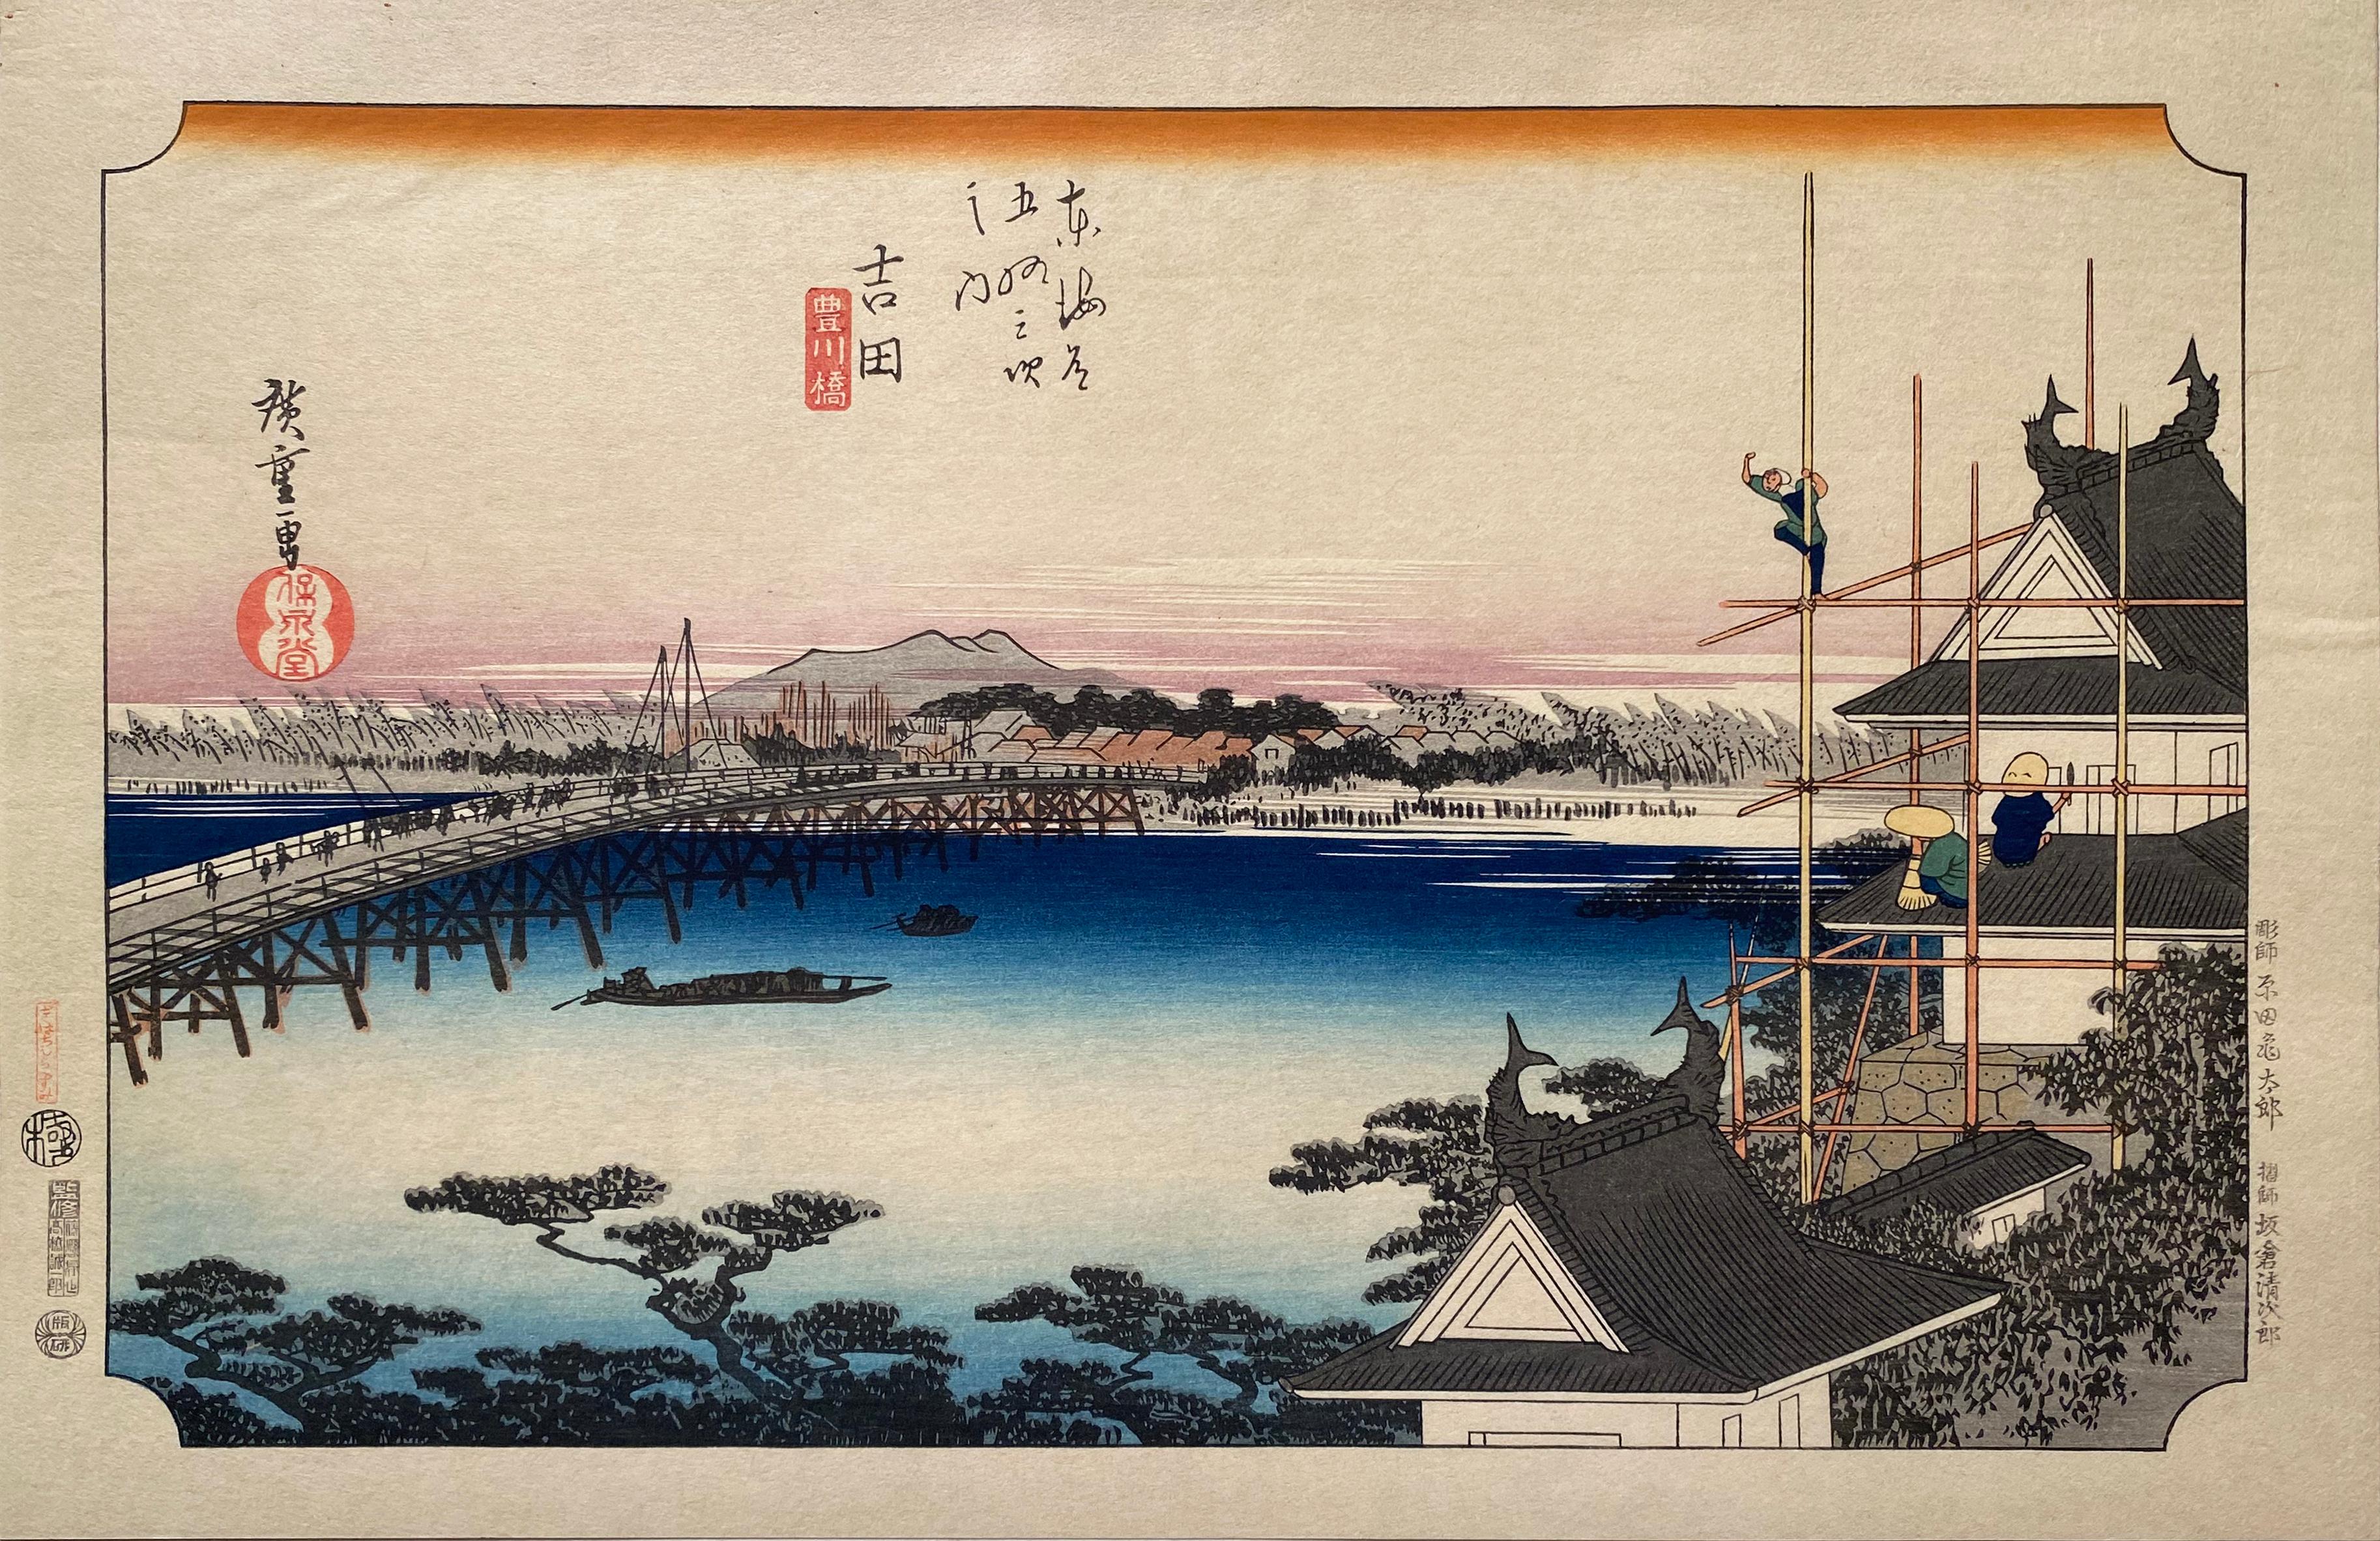 Utagawa Hiroshige (Ando Hiroshige) Landscape Print - 'View of Yoshida',  After Utagawa Hiroshige 歌川廣重, Ukiyo-e Woodblock, Tokaido